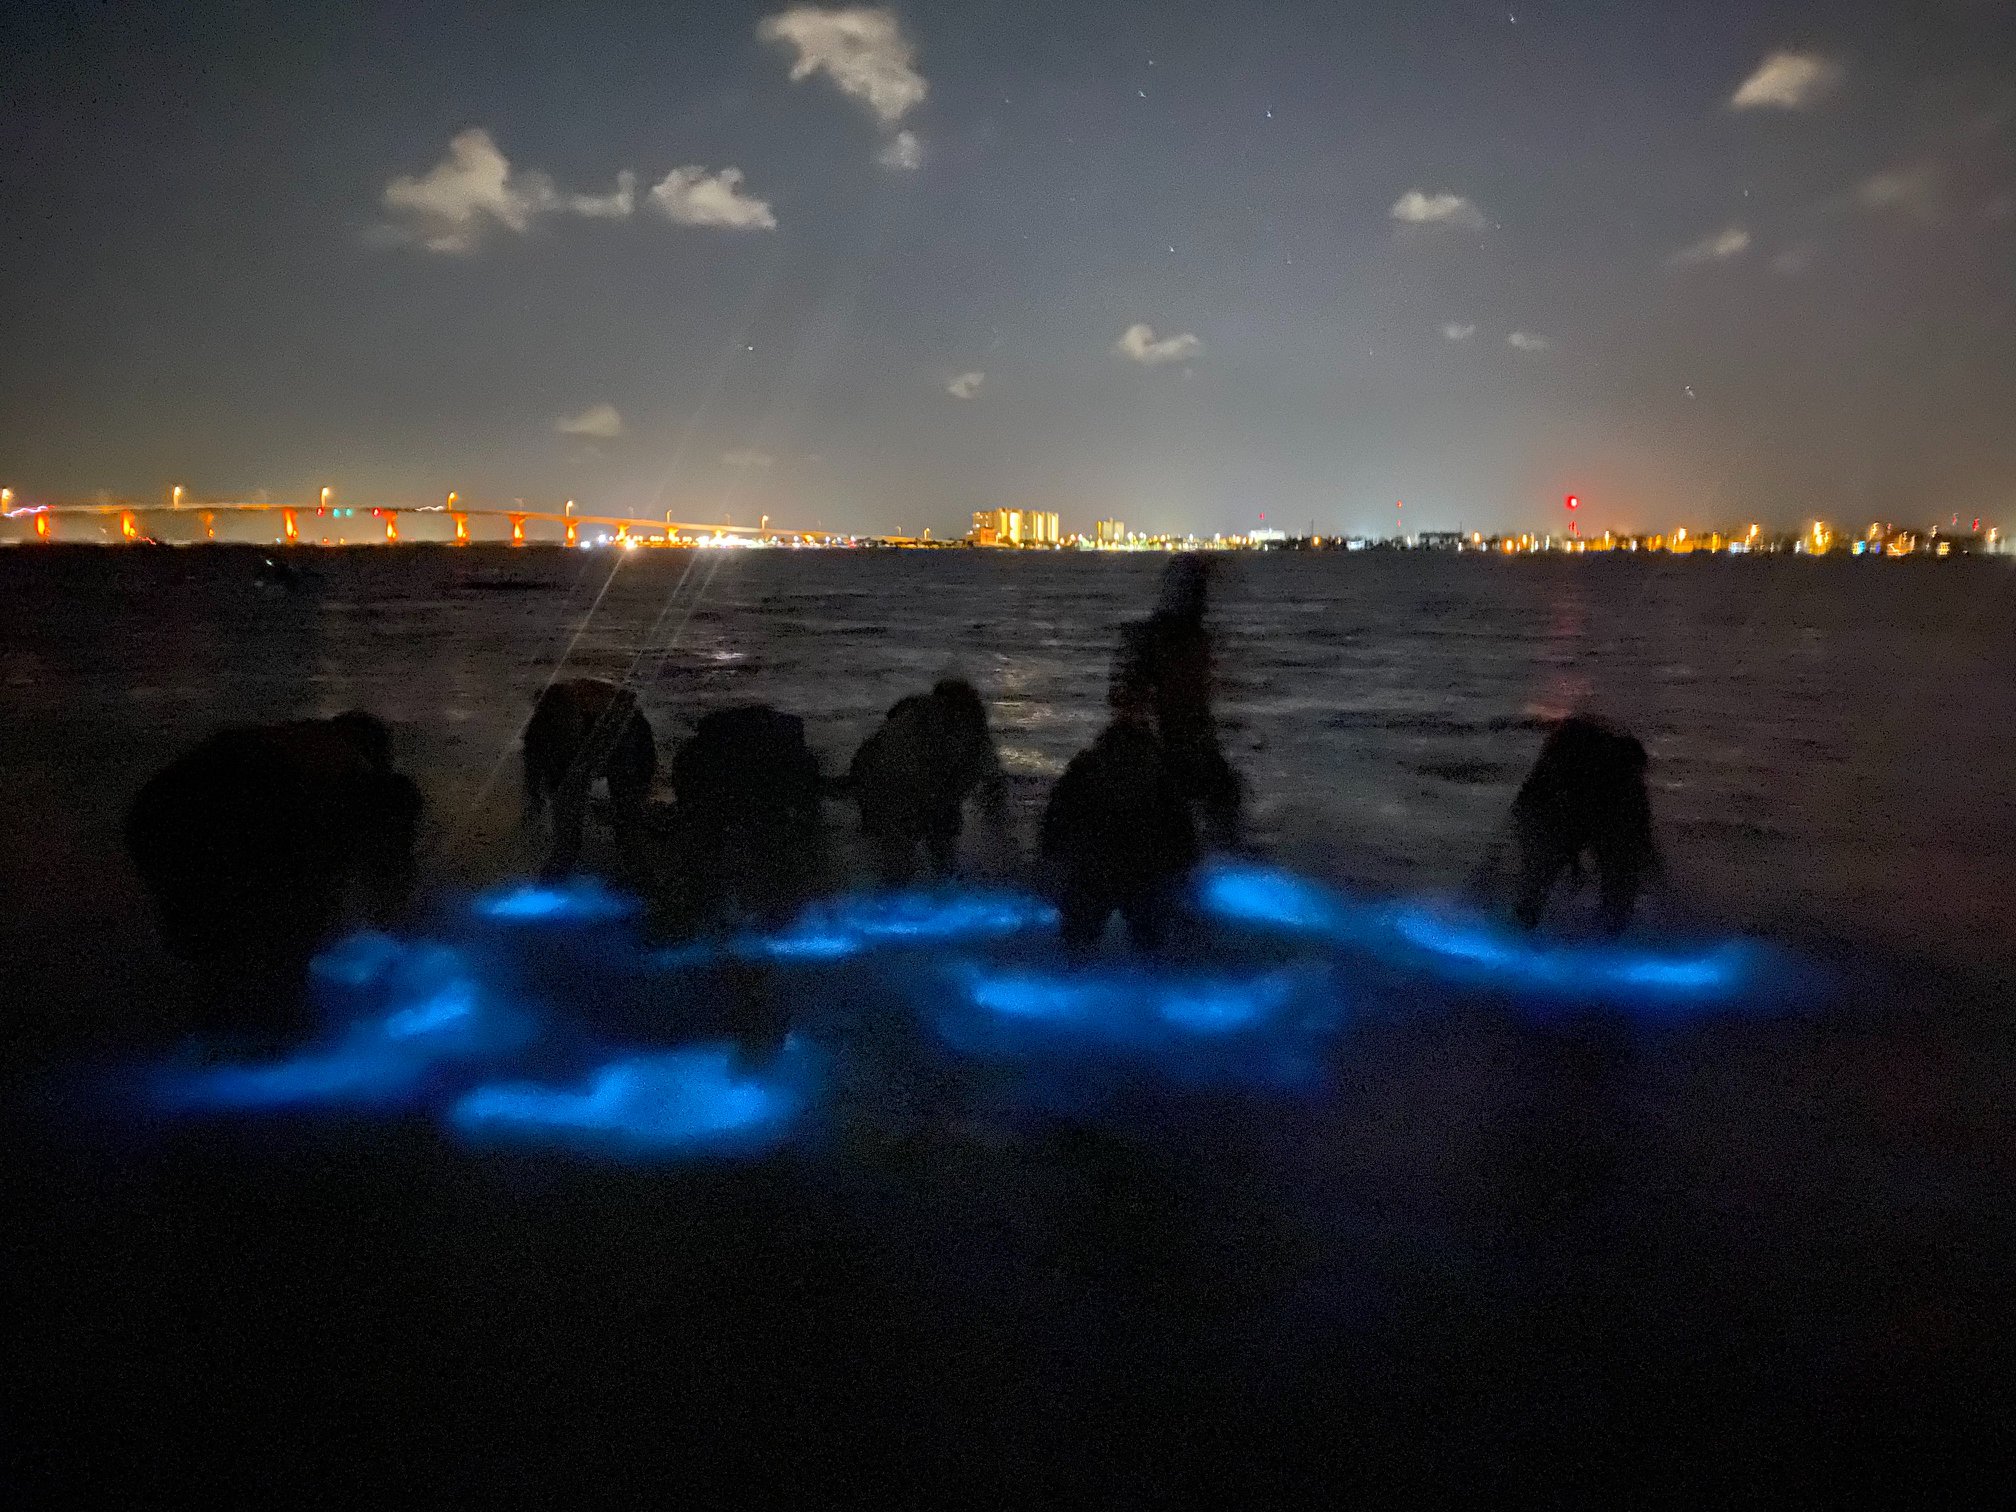 Bioluminescence Kayak Tour in Orlando